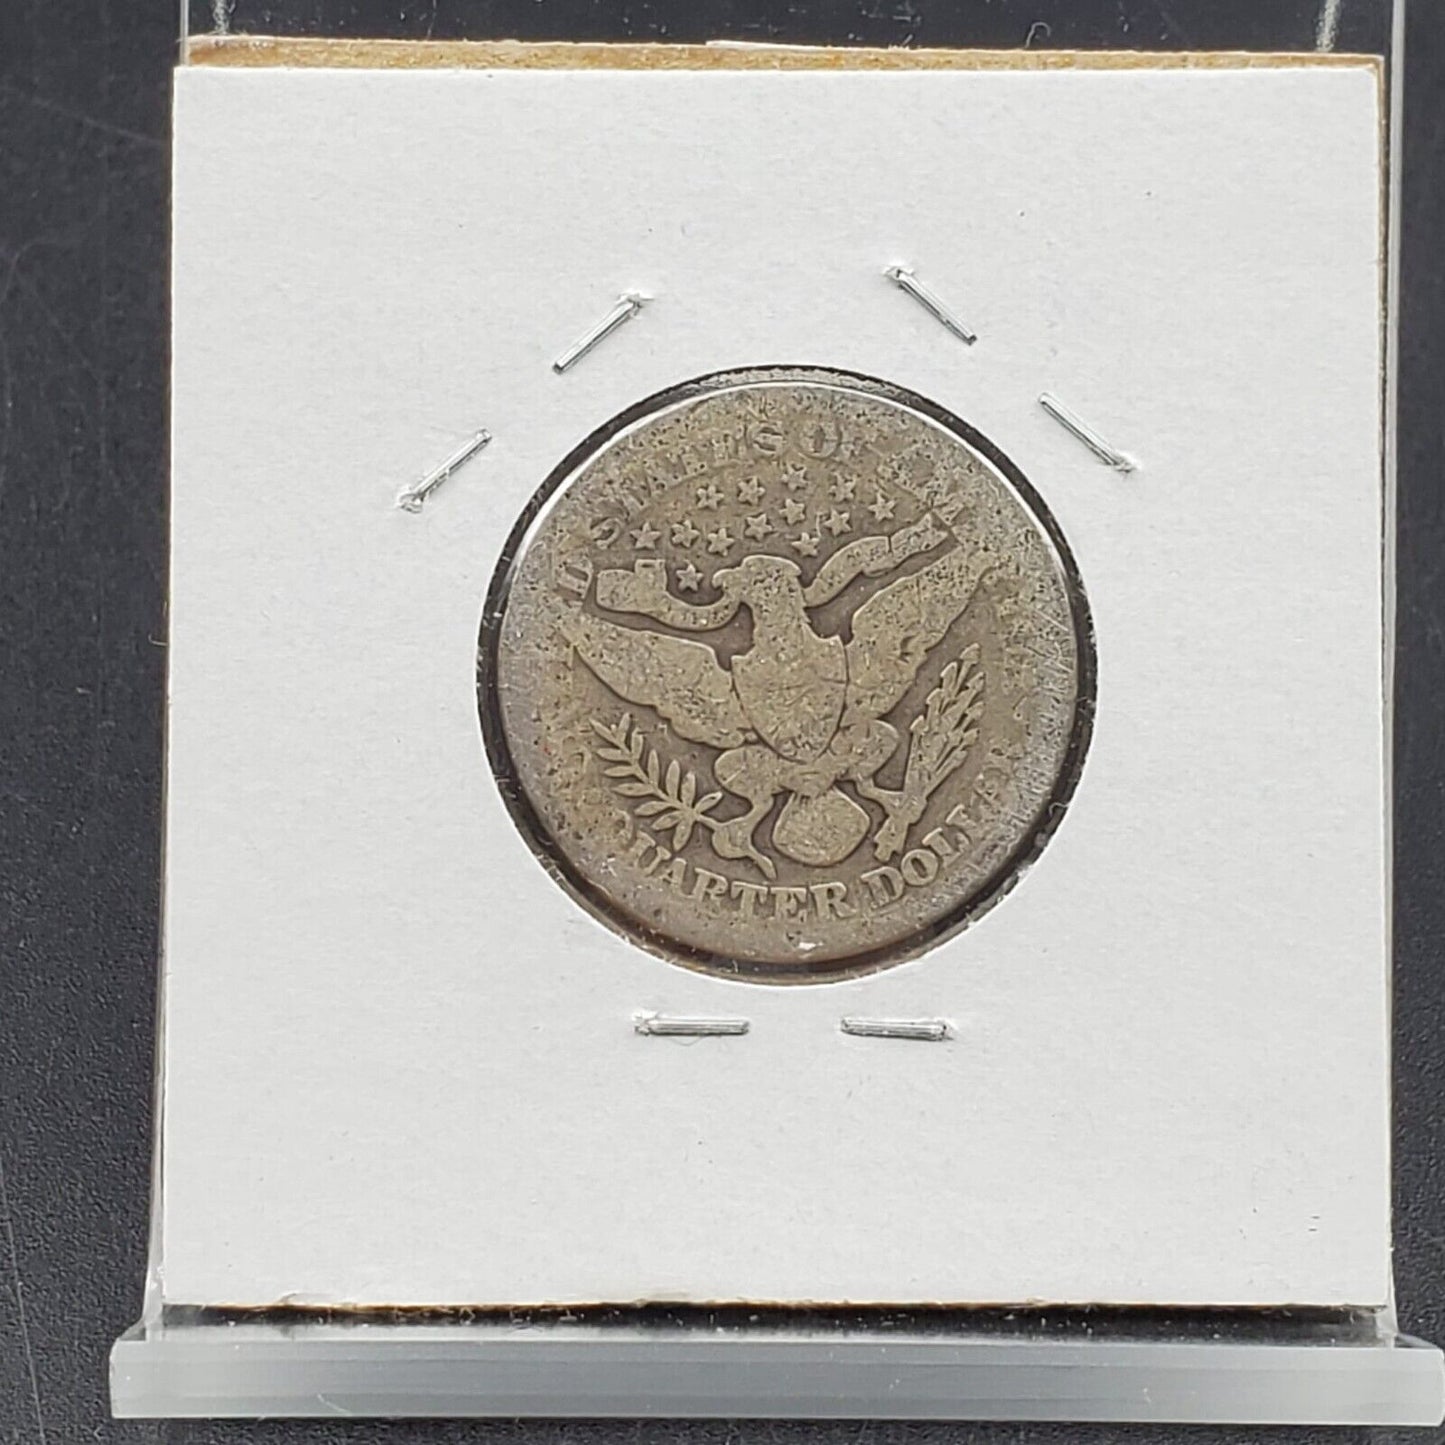 1898 P Barber Silver Quarter Coin Average AG Circulated Condition